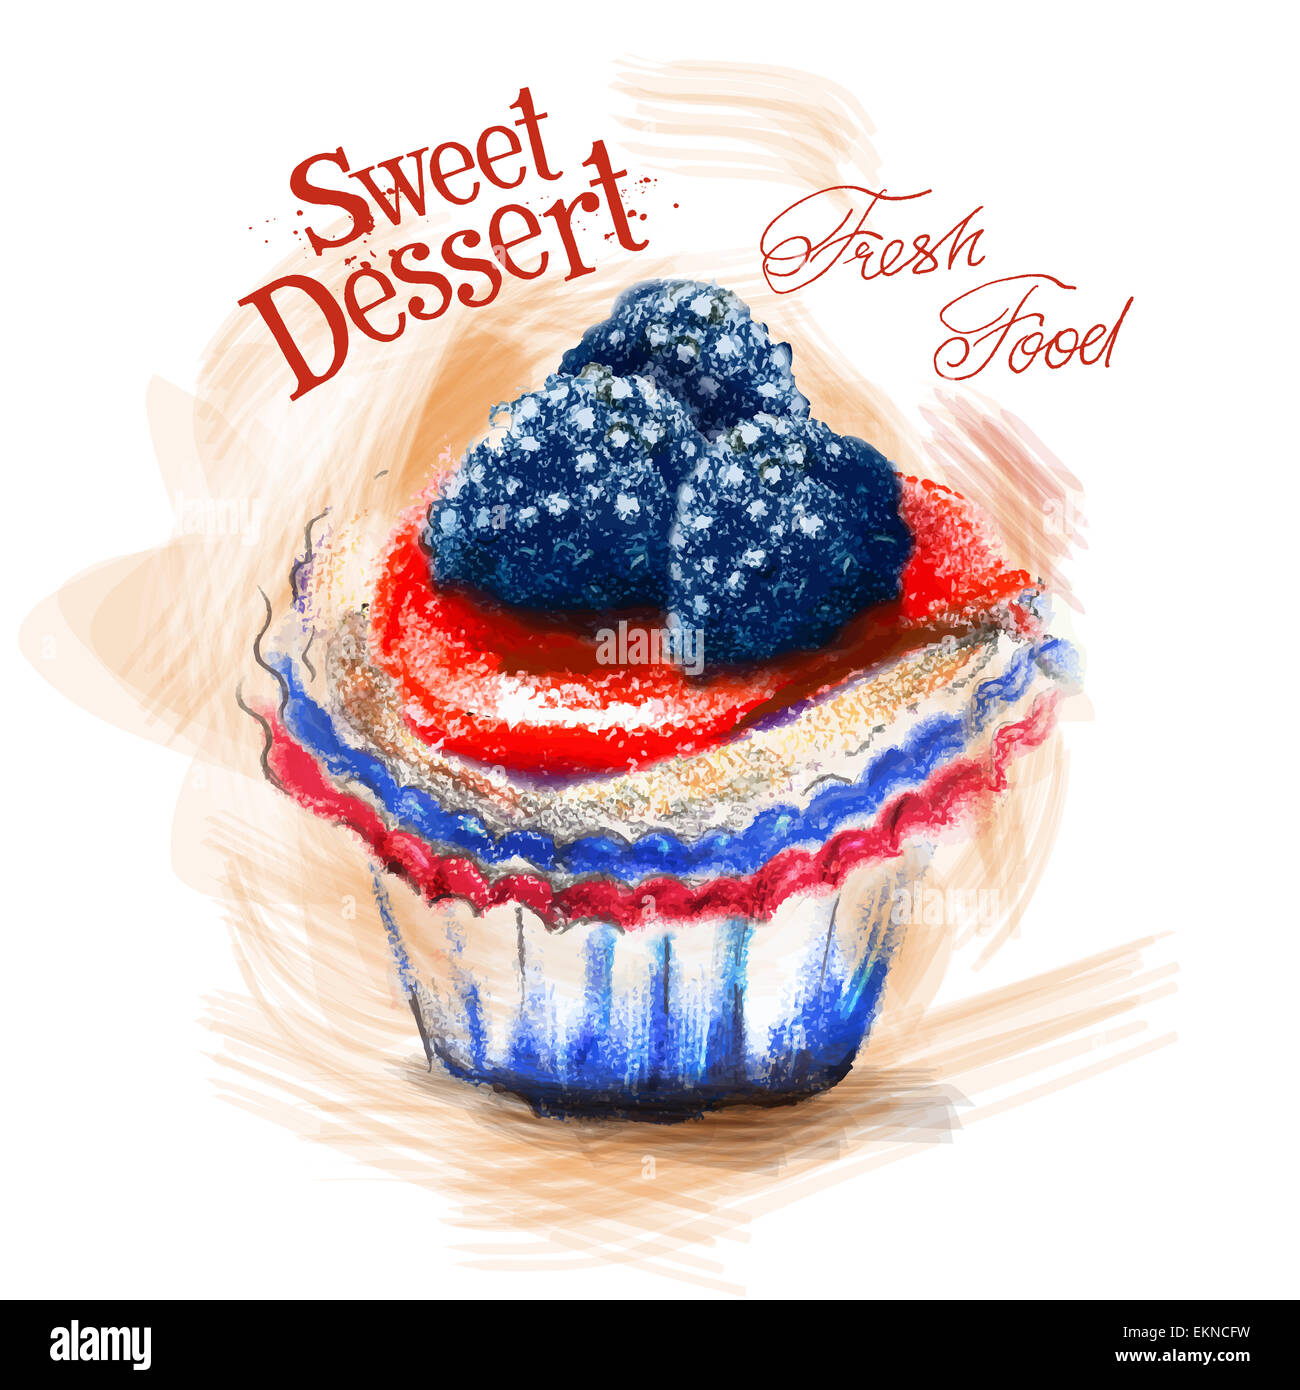 dessert vector logo design template. cake or fresh food icon. Stock Photo